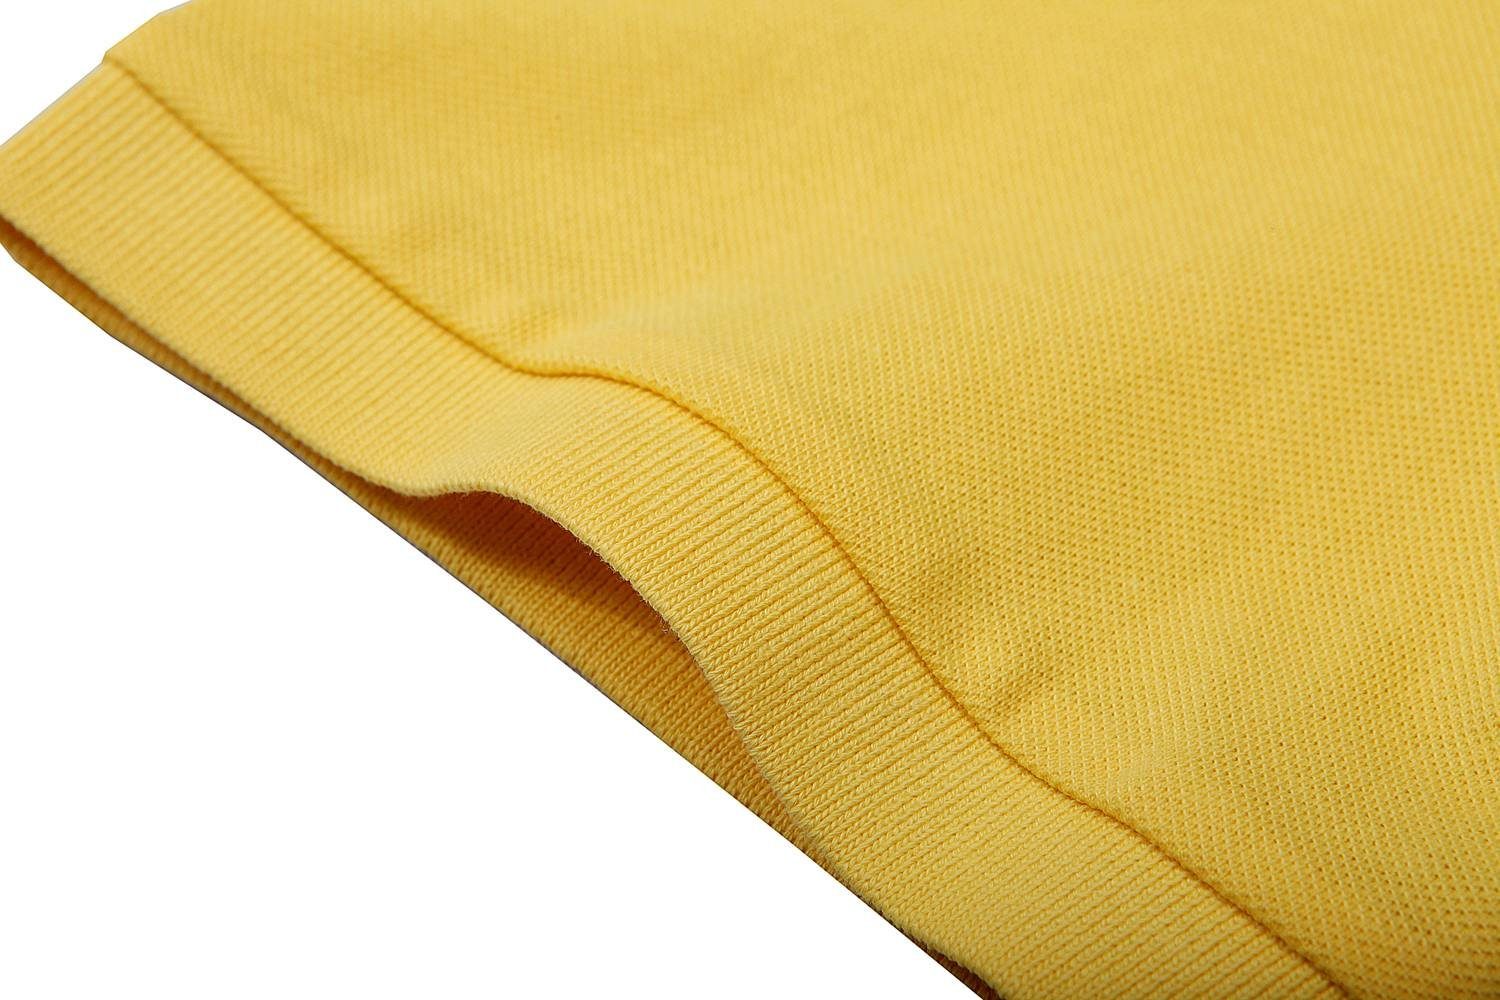 GLO-STORY Poloshirt GLO-STORY Kurzarm Poloshirt Herren Shirt Regular Basic Gelb Polo Polohemd